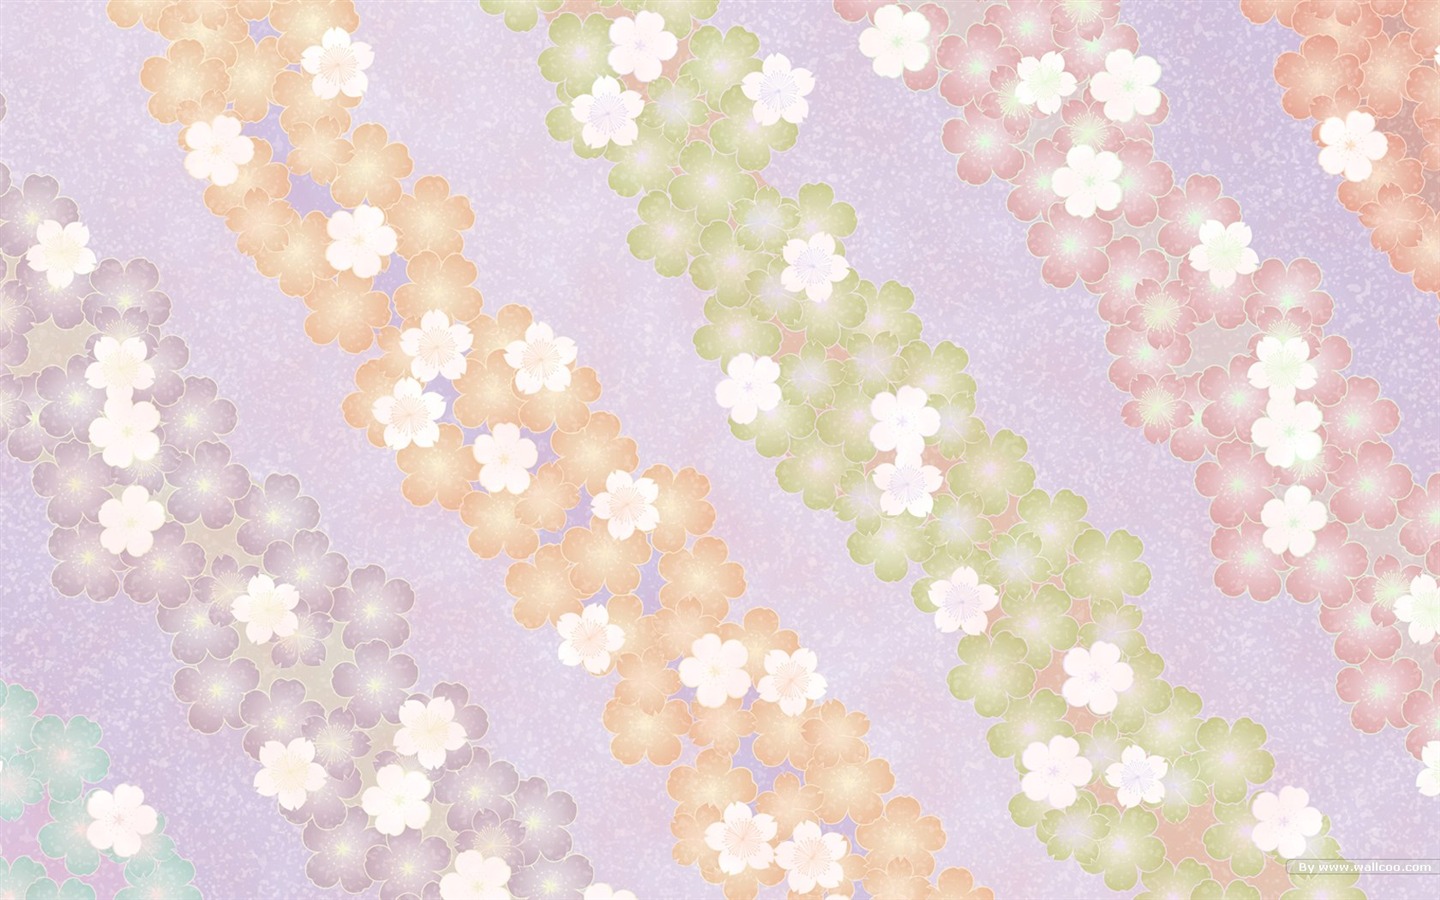 Japan-Stil Tapete Muster und Farbe #10 - 1440x900